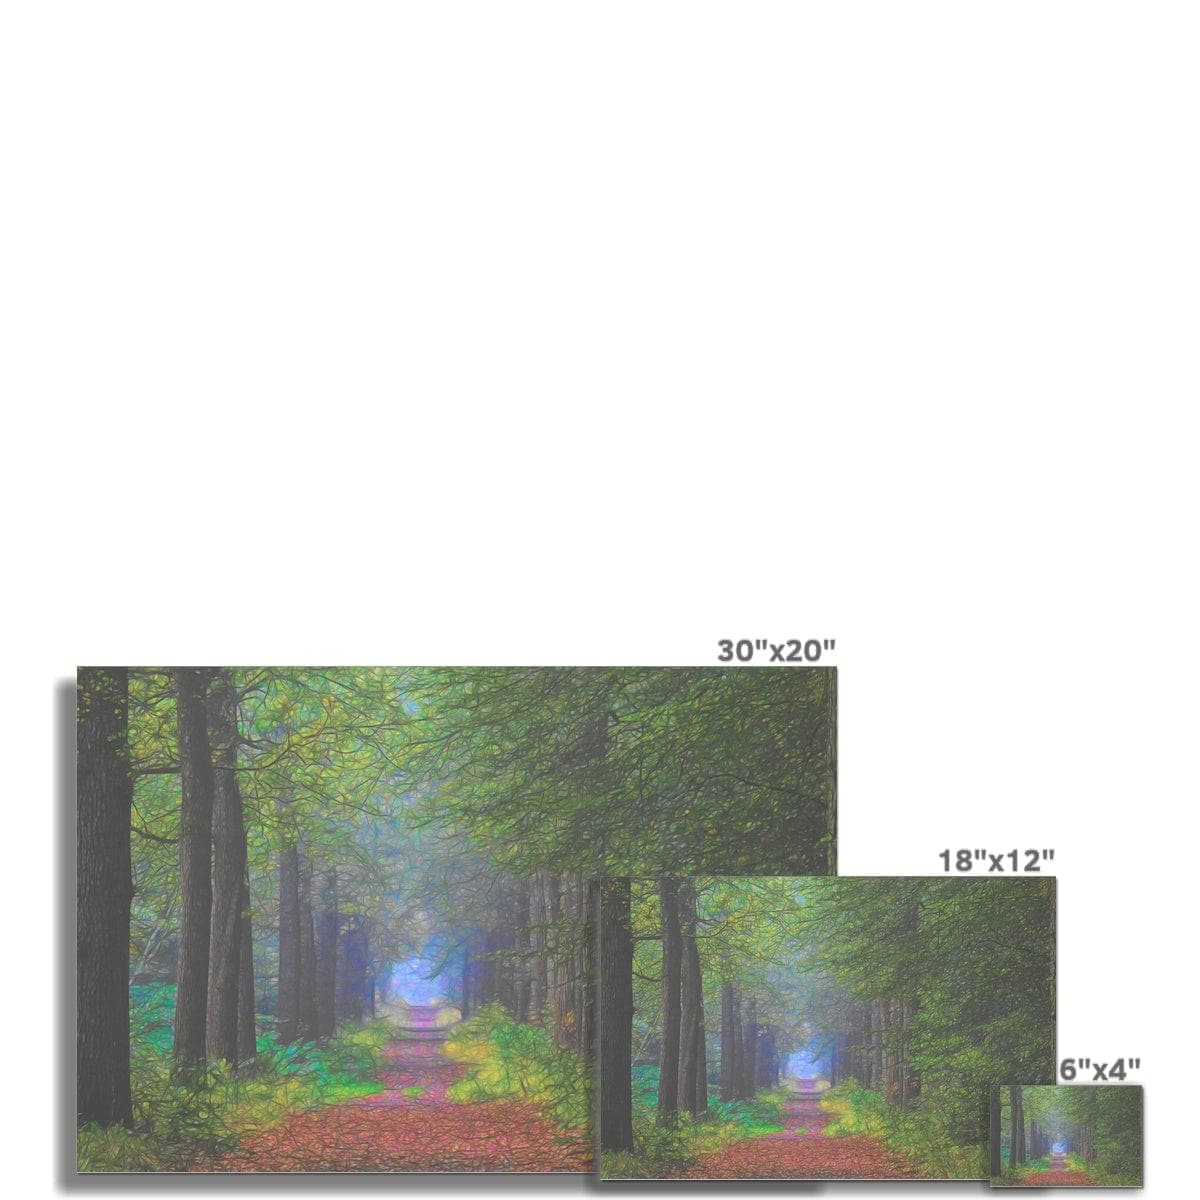 Forest lane, Hahnemühle German Etching Print, by Ingrid Hütten